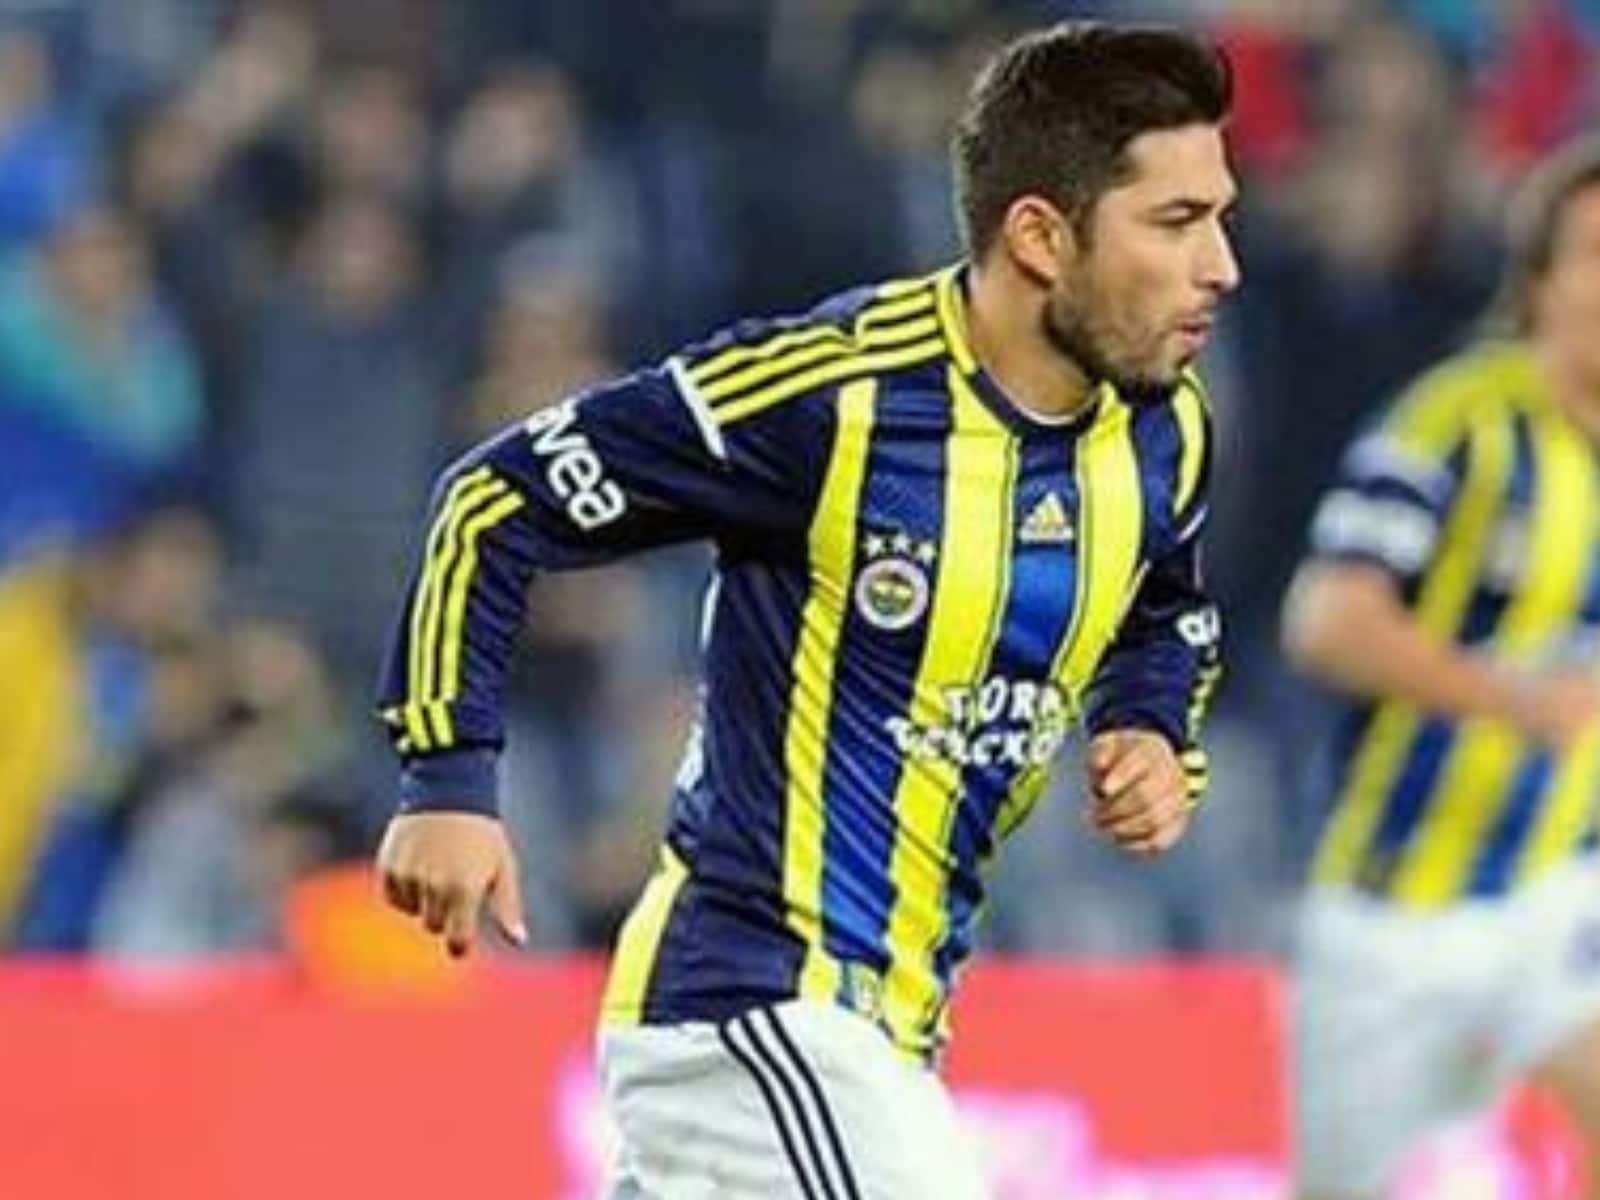 Former Super Lig Footballer Sezer Ozturk Connected To Fatal Shooting Says Report